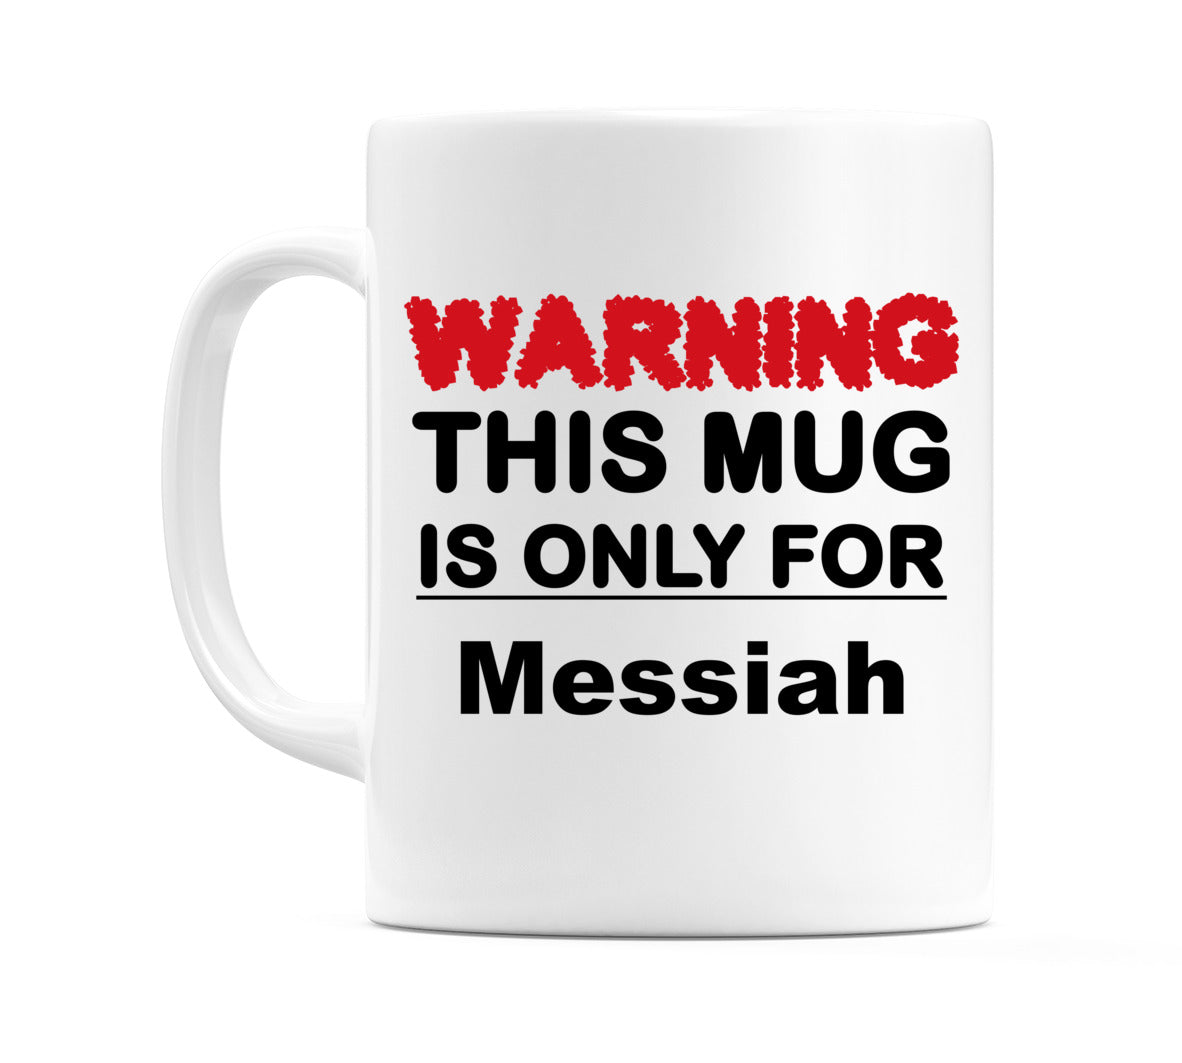 Warning This Mug is ONLY for Messiah Mug